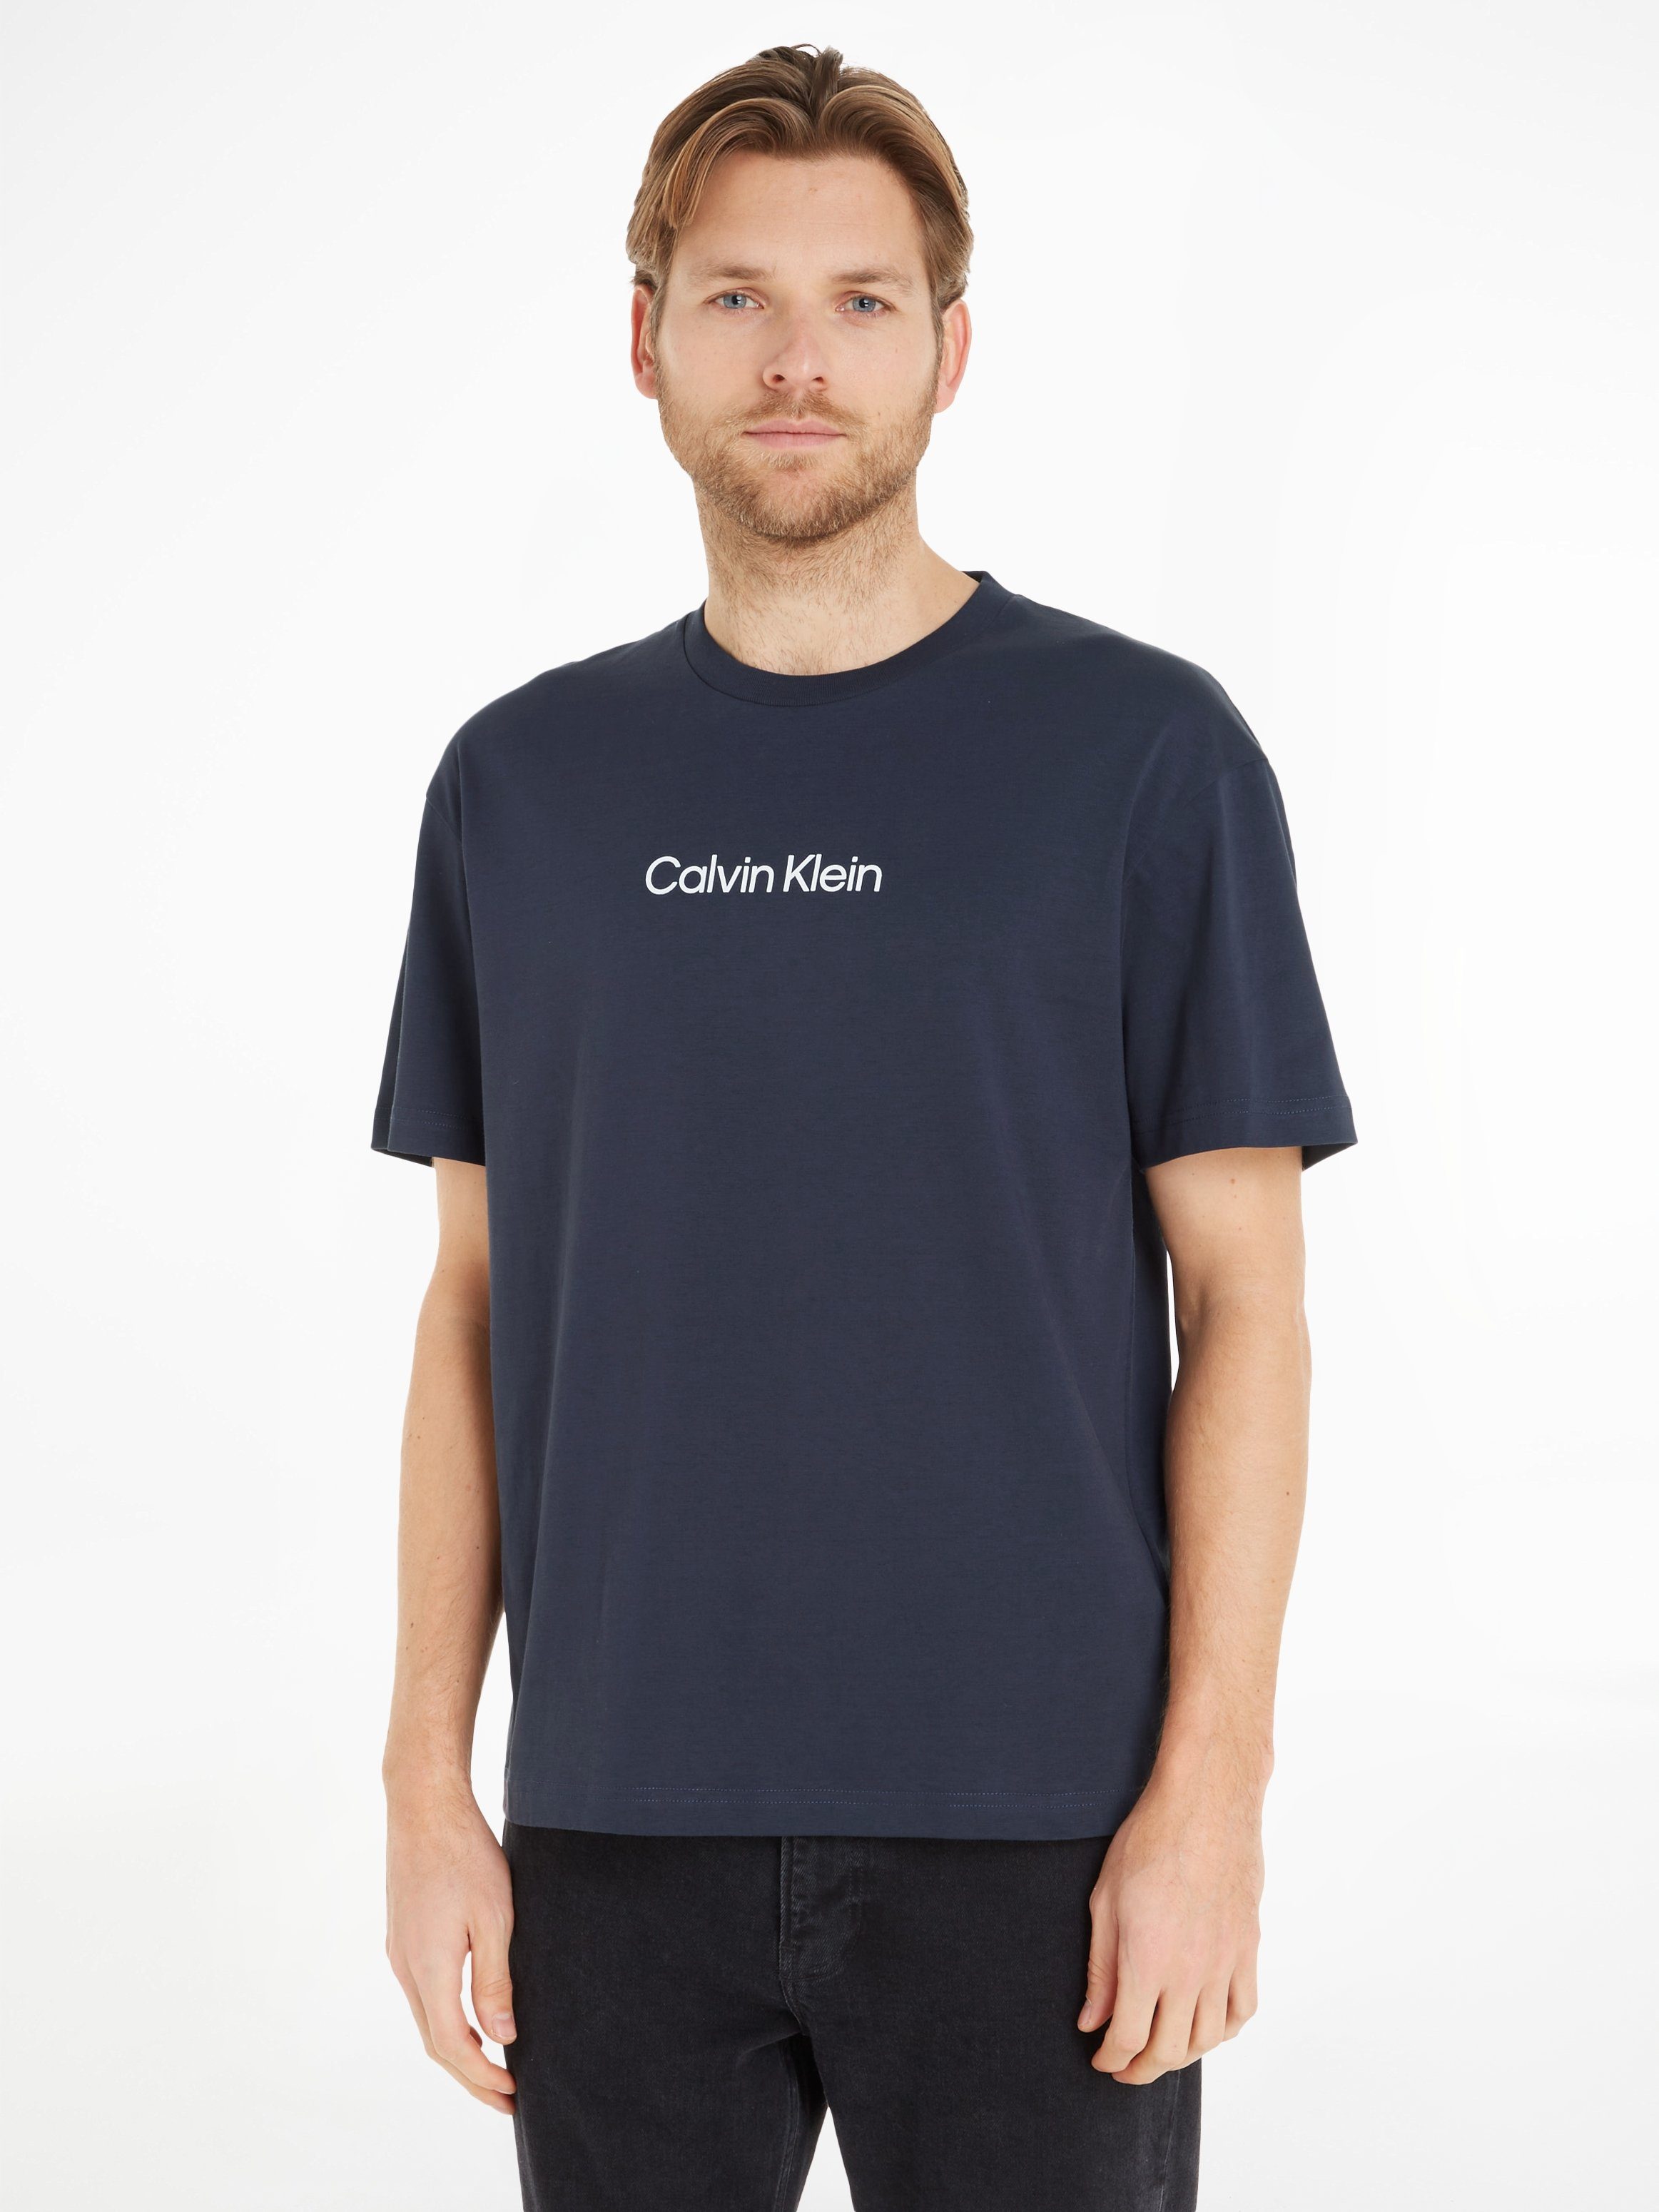 Calvin Klein T-Shirt HERO LOGO COMFORT T-SHIRT mit aufgedrucktem Markenlabel Night Sky | T-Shirts